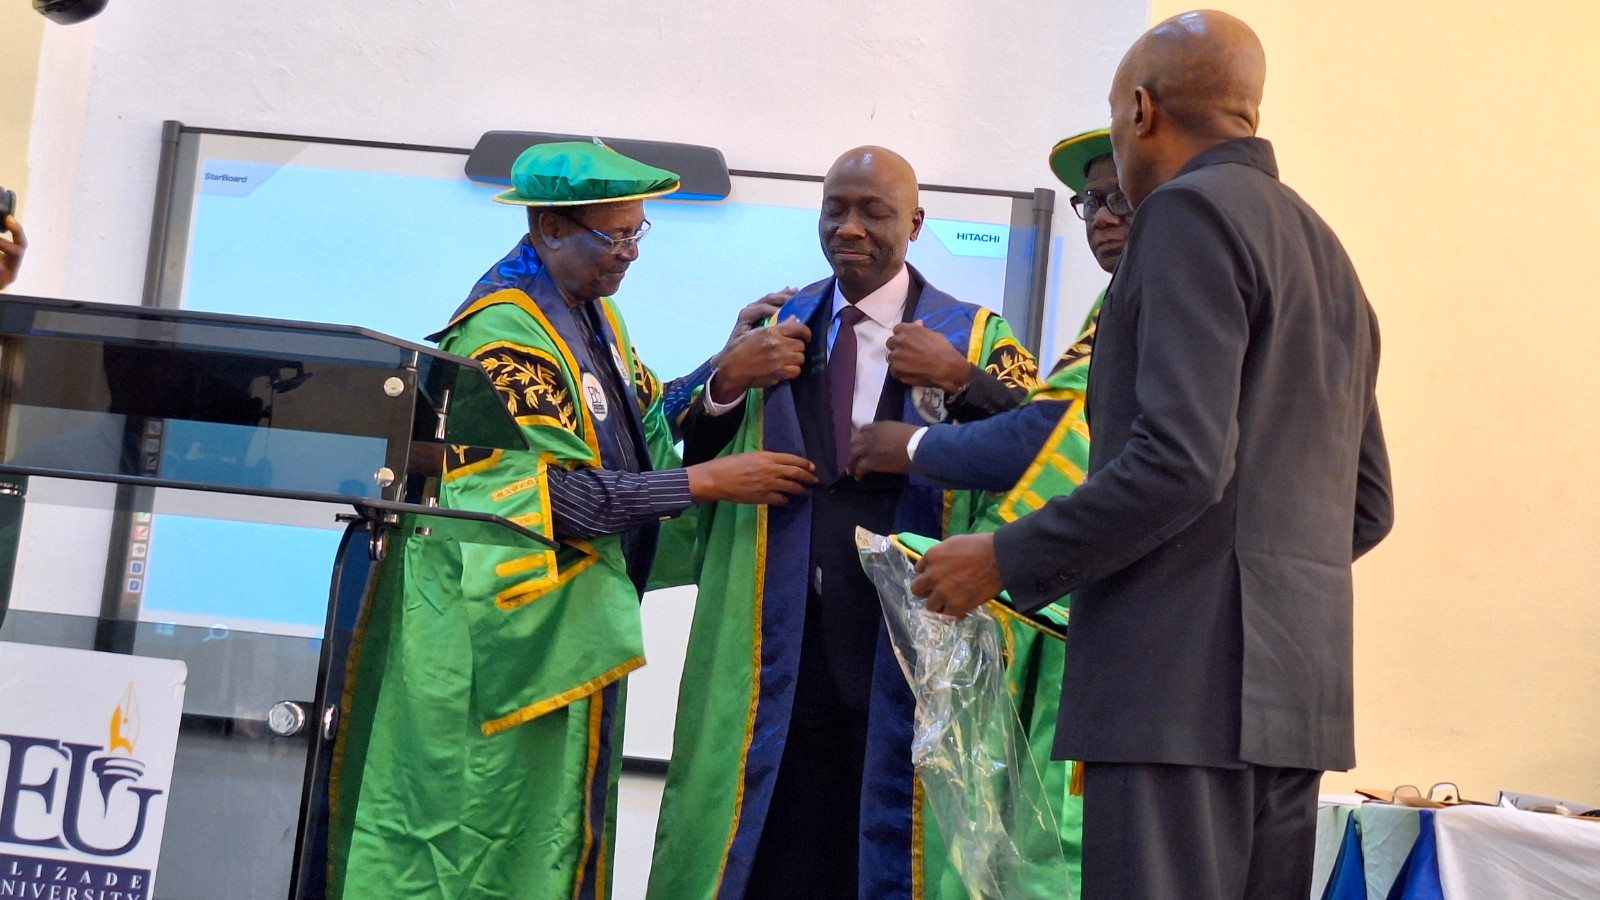 Dr. Ijadunola Inaugurated as Vice-Chancellor of Elizade University